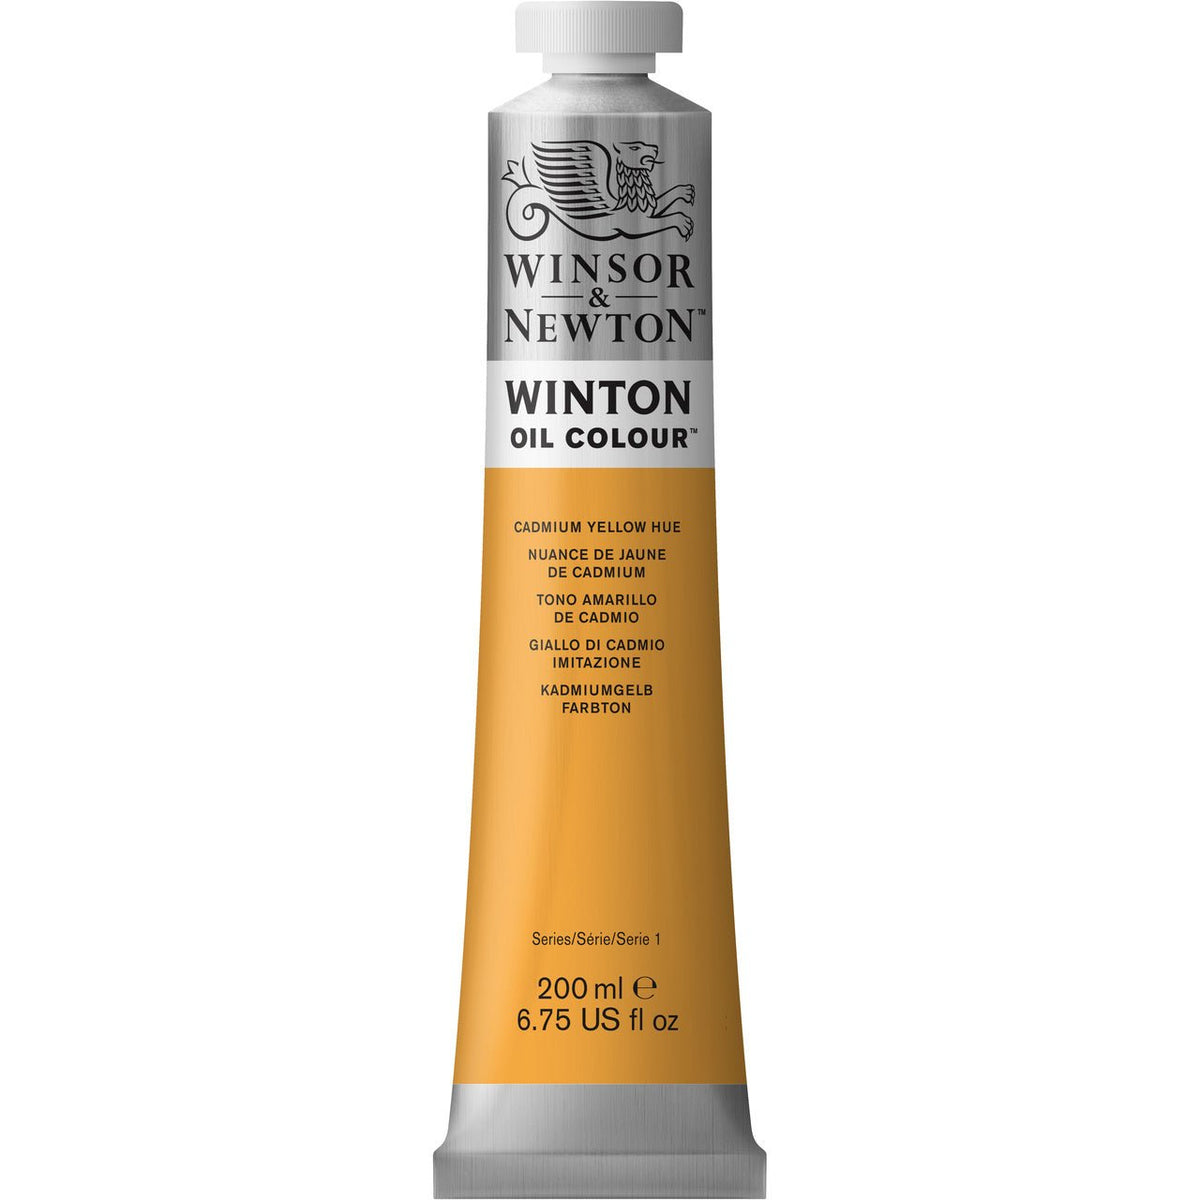 Winsor & Newton Winton 200ml Oil Colour - Cadmium Yellow Pale Hue